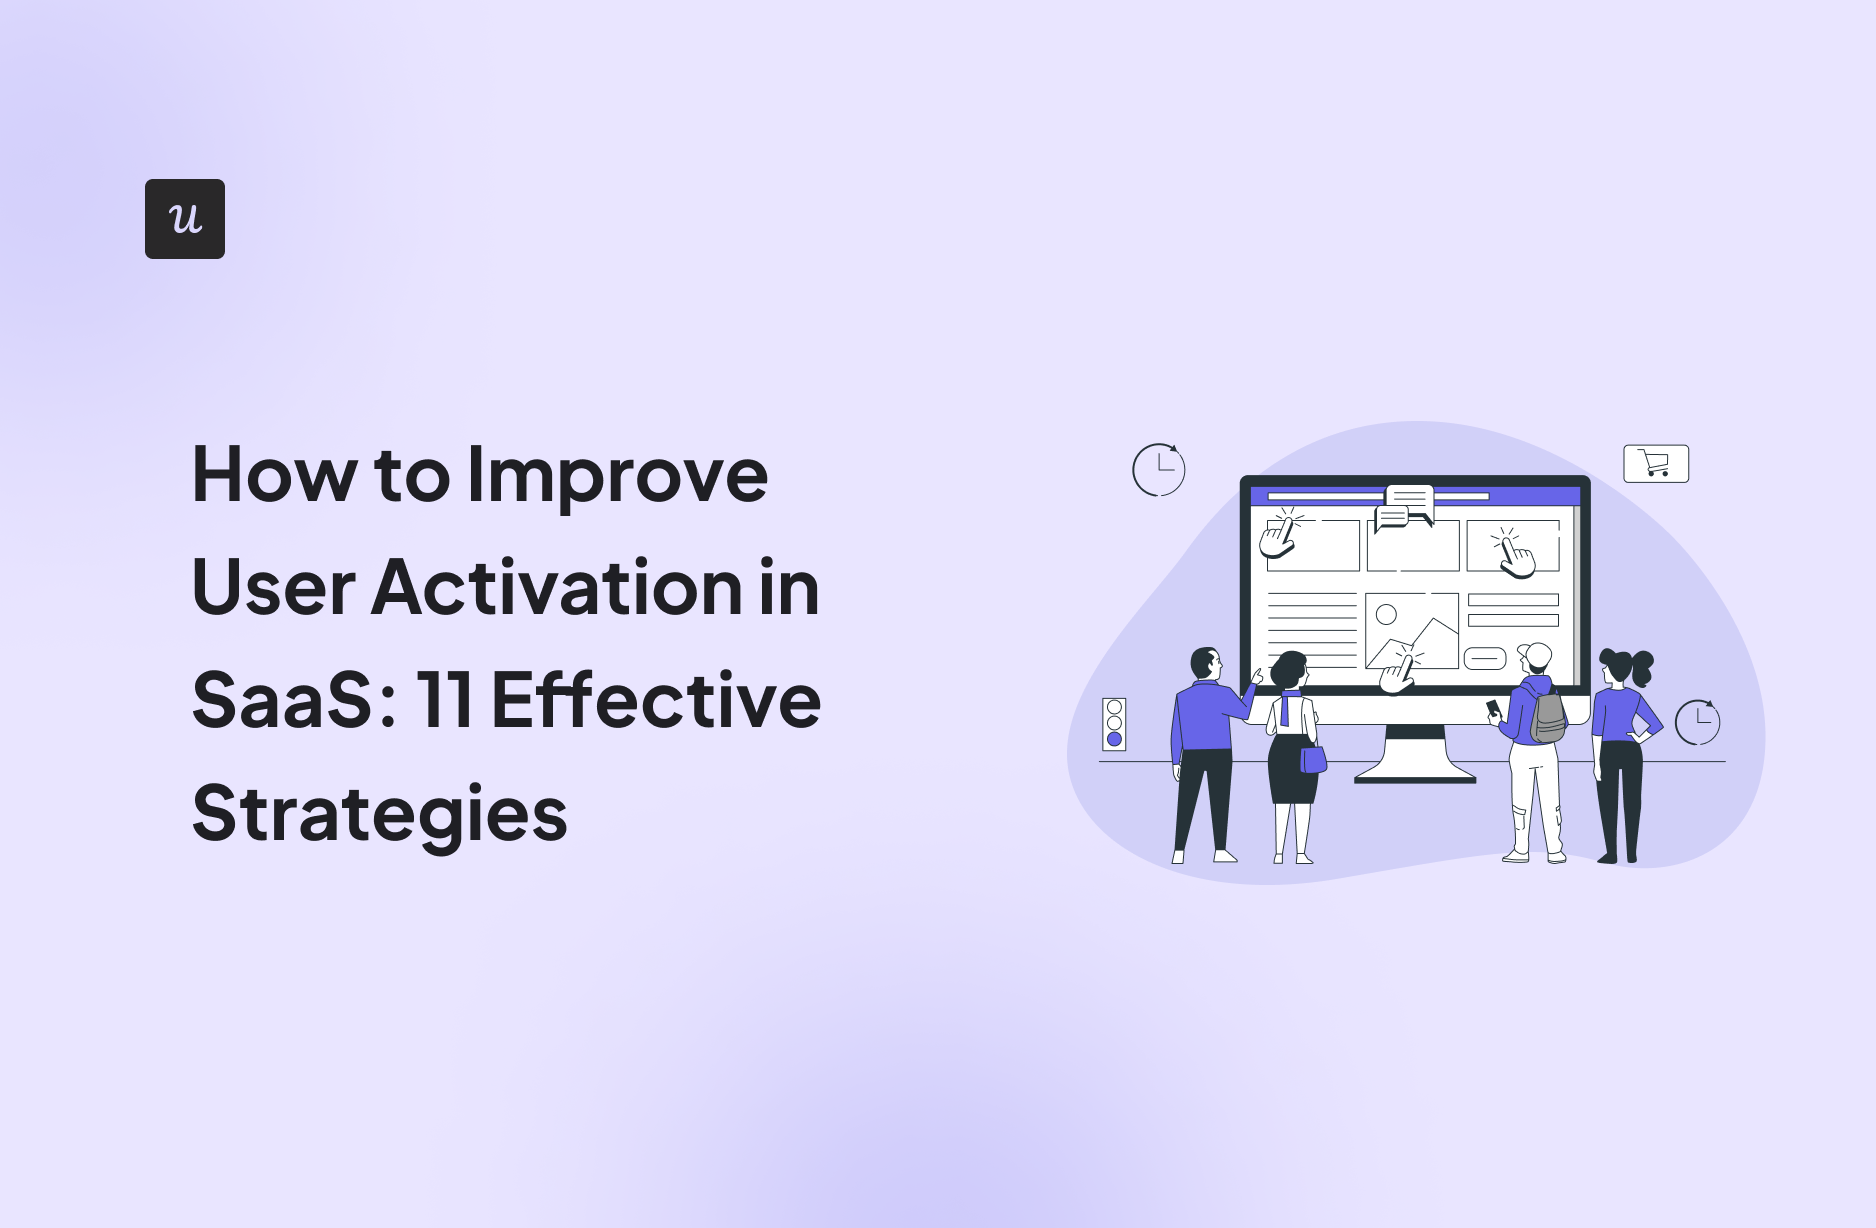 How to Improve User Activation in SaaS: 11 Effective Strategies